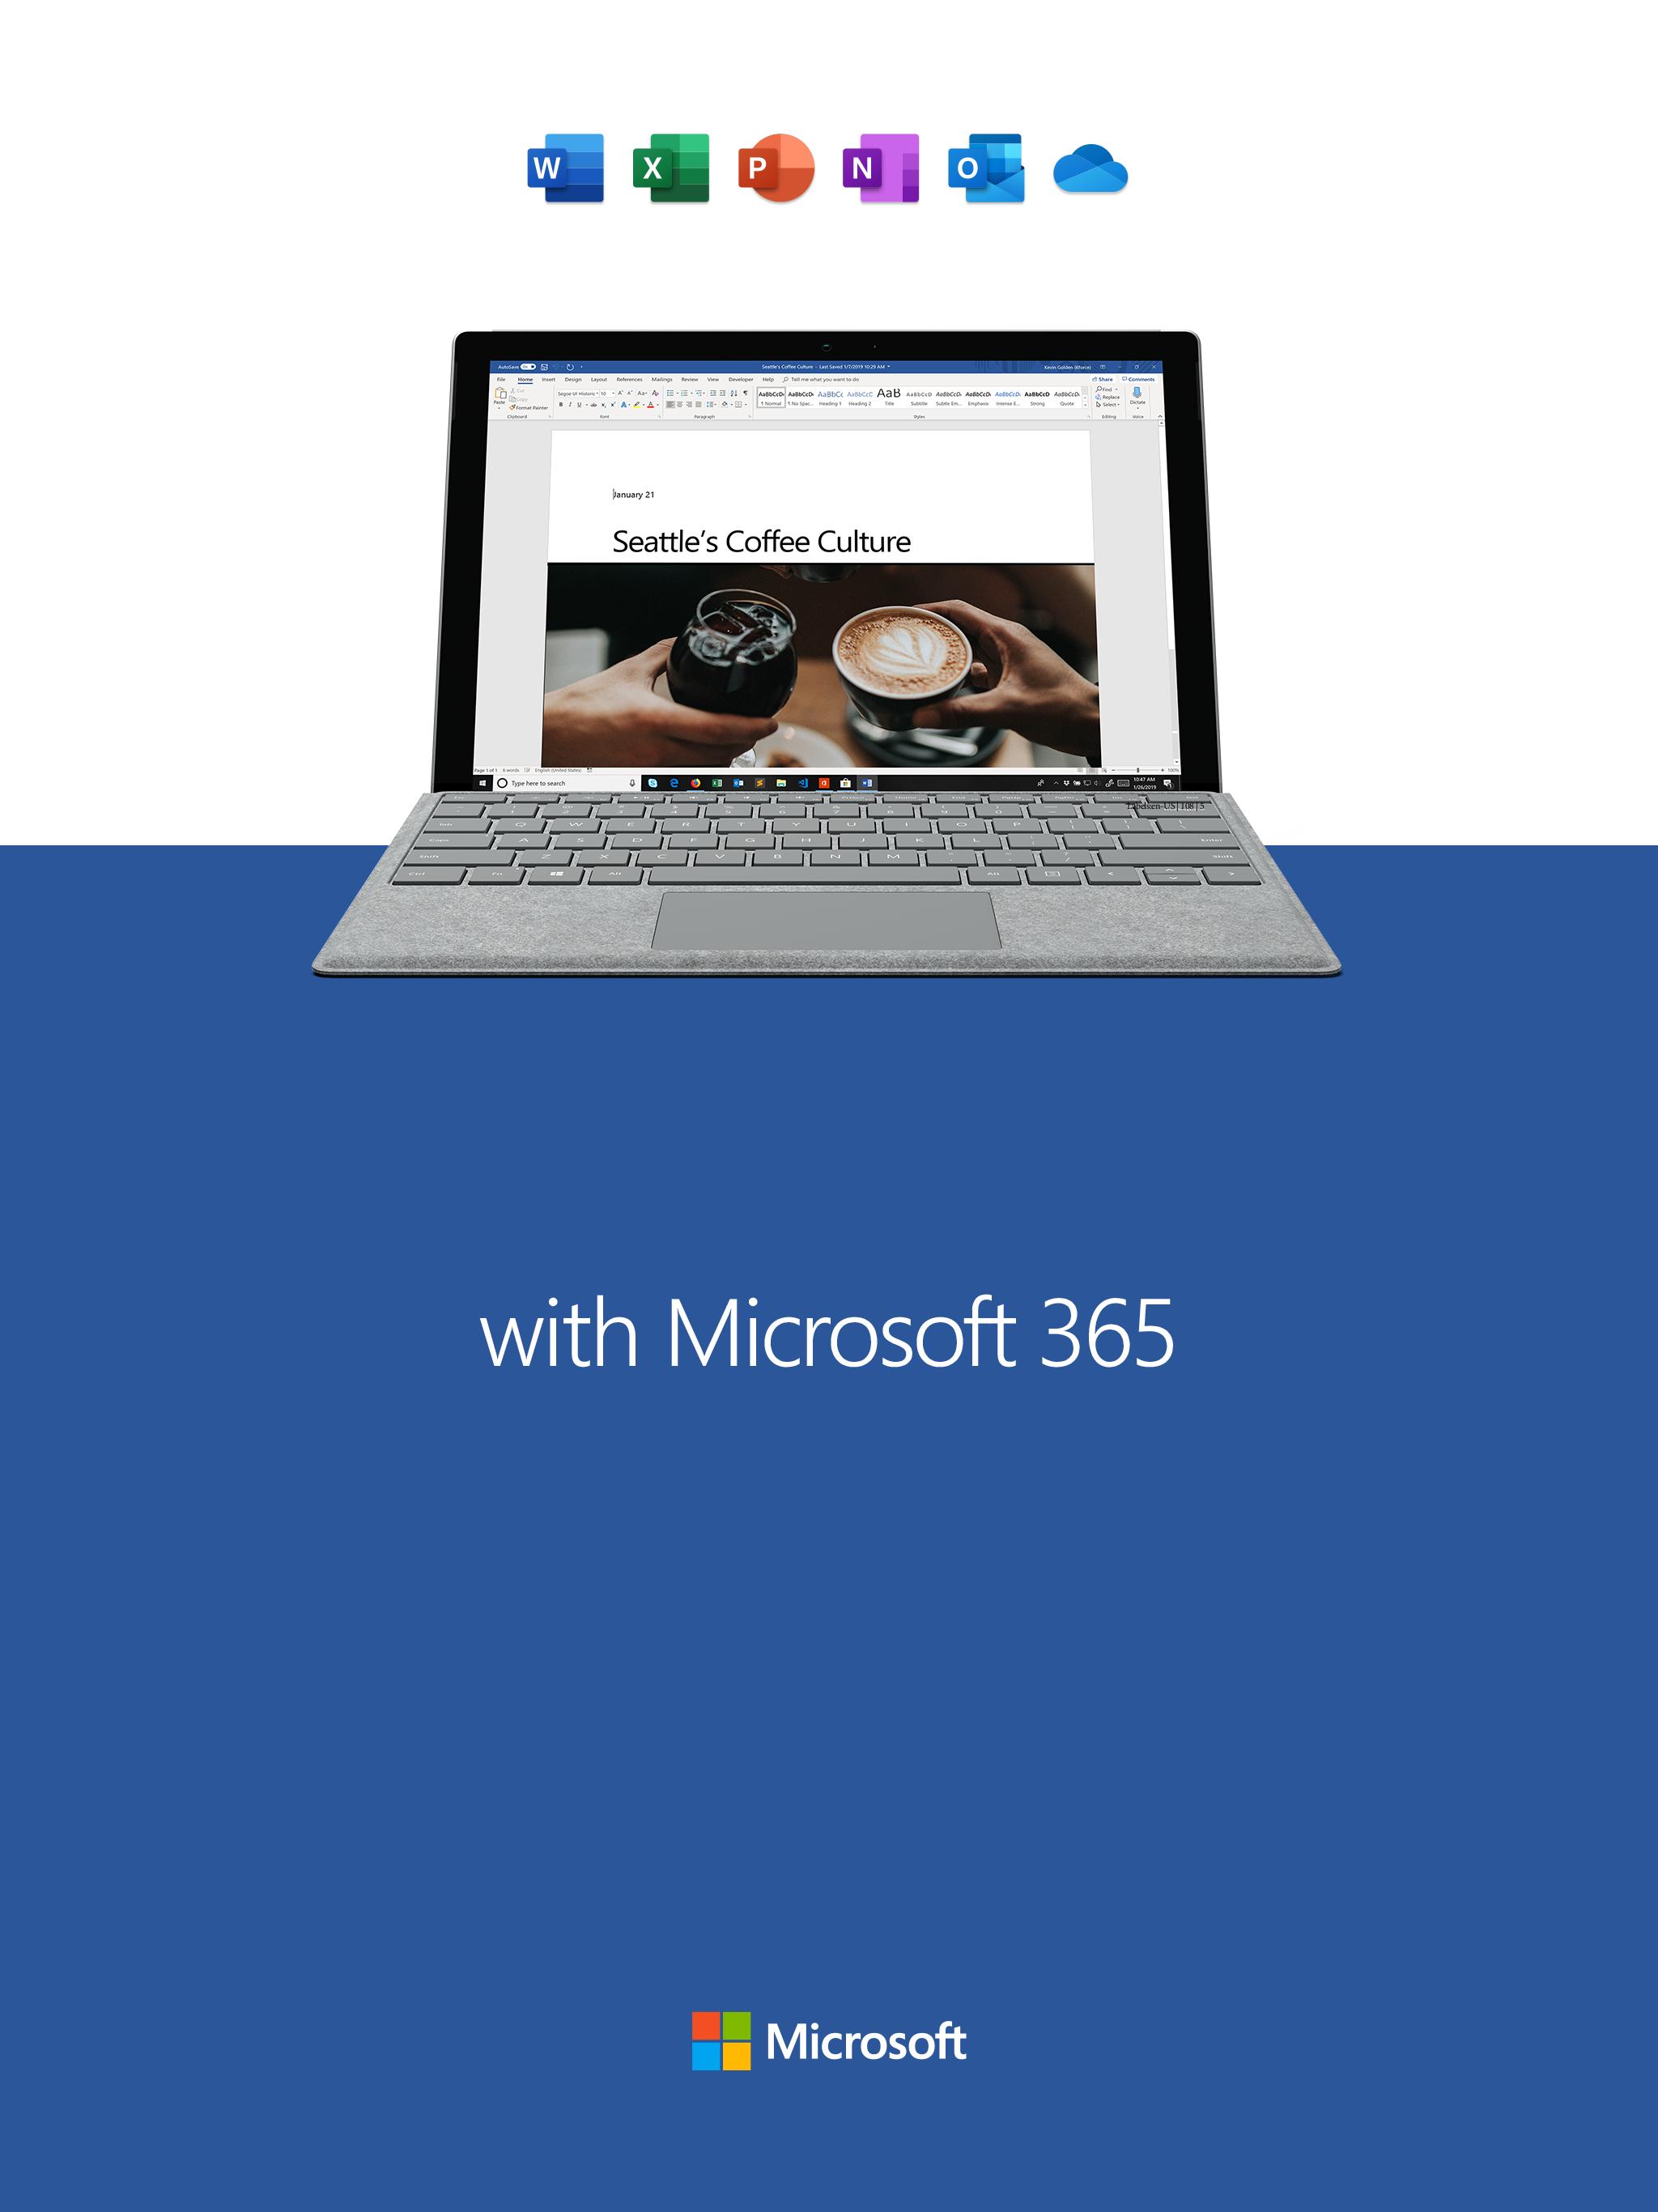 Microsoft Word: Write, Edit & Share Docs on the Go 16.0.13426.20196 Screenshot 10